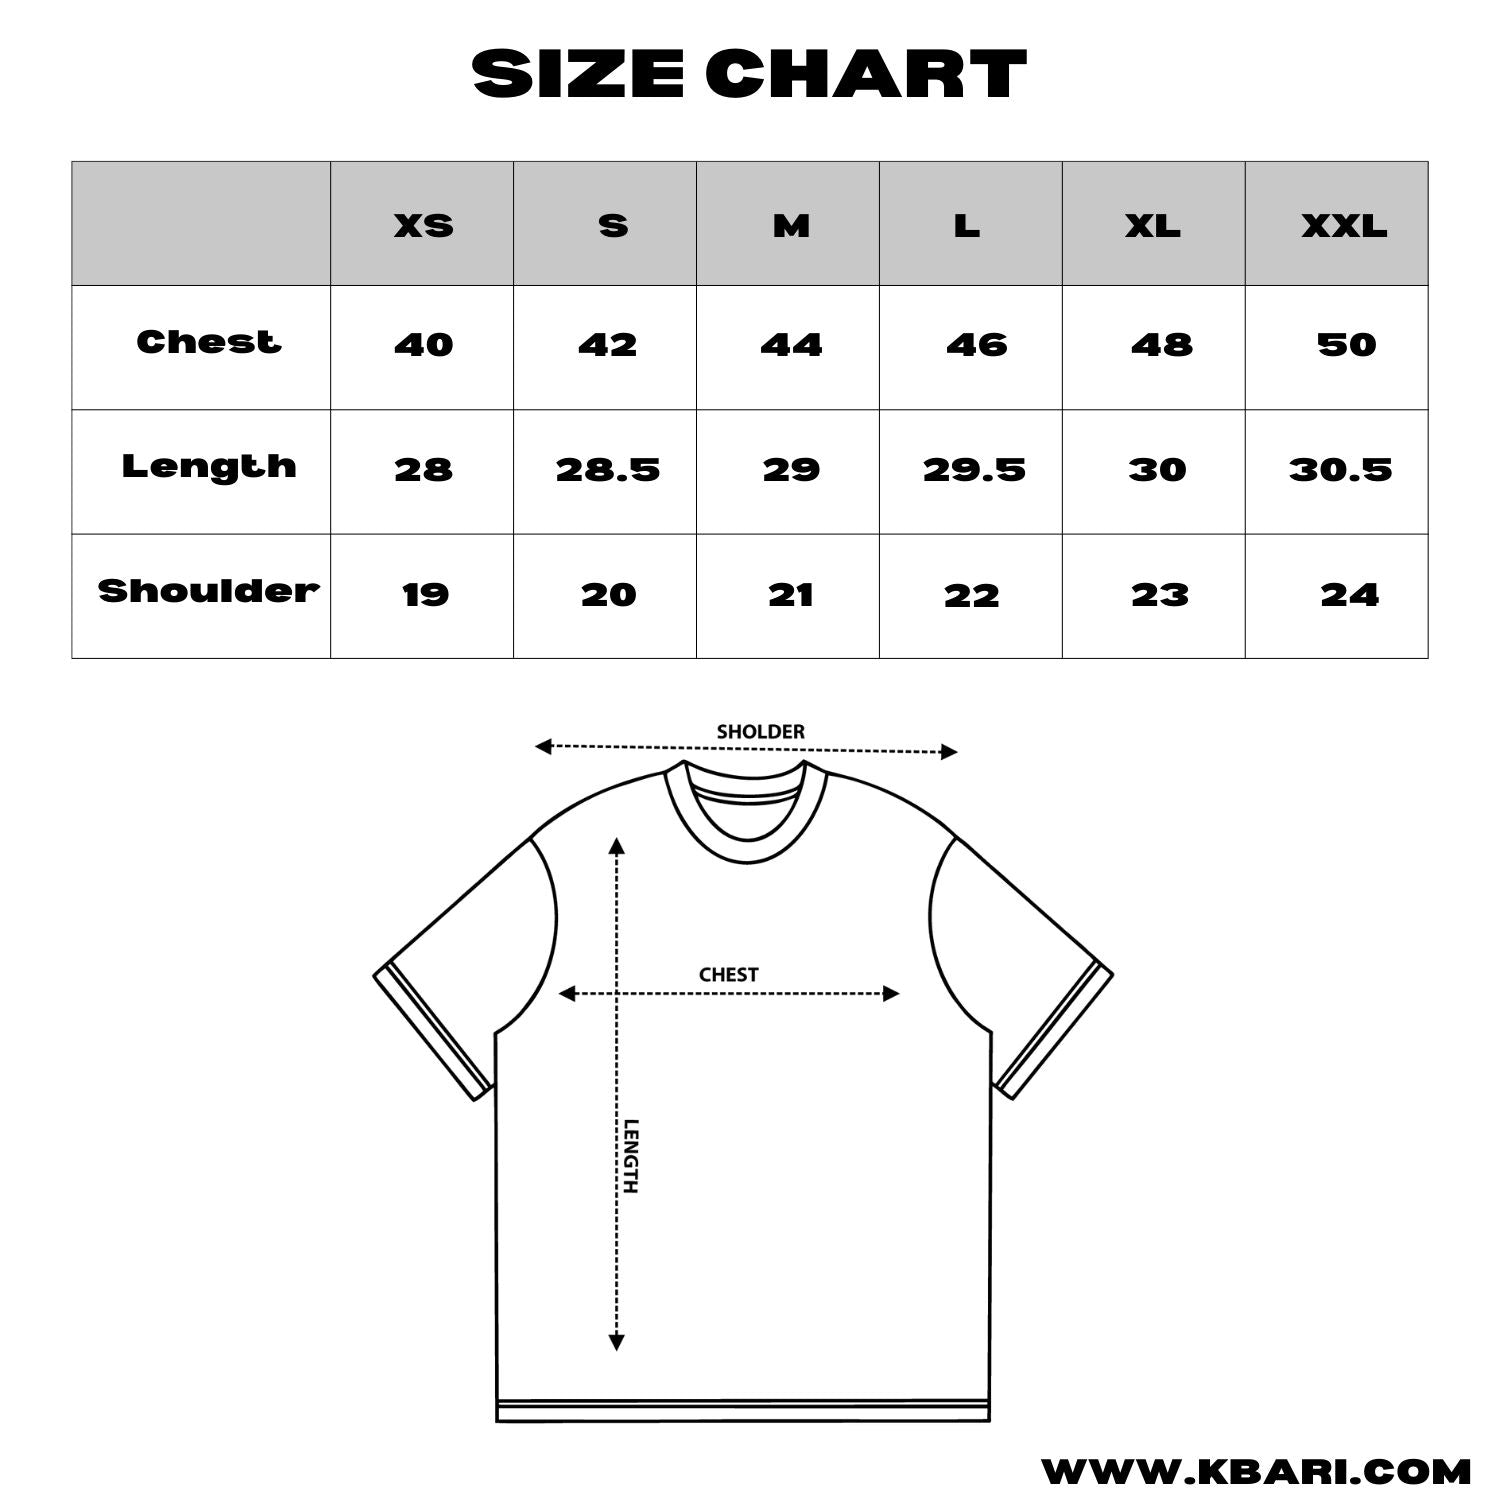 Naruto Graphic Printed Oversized T-Shirt